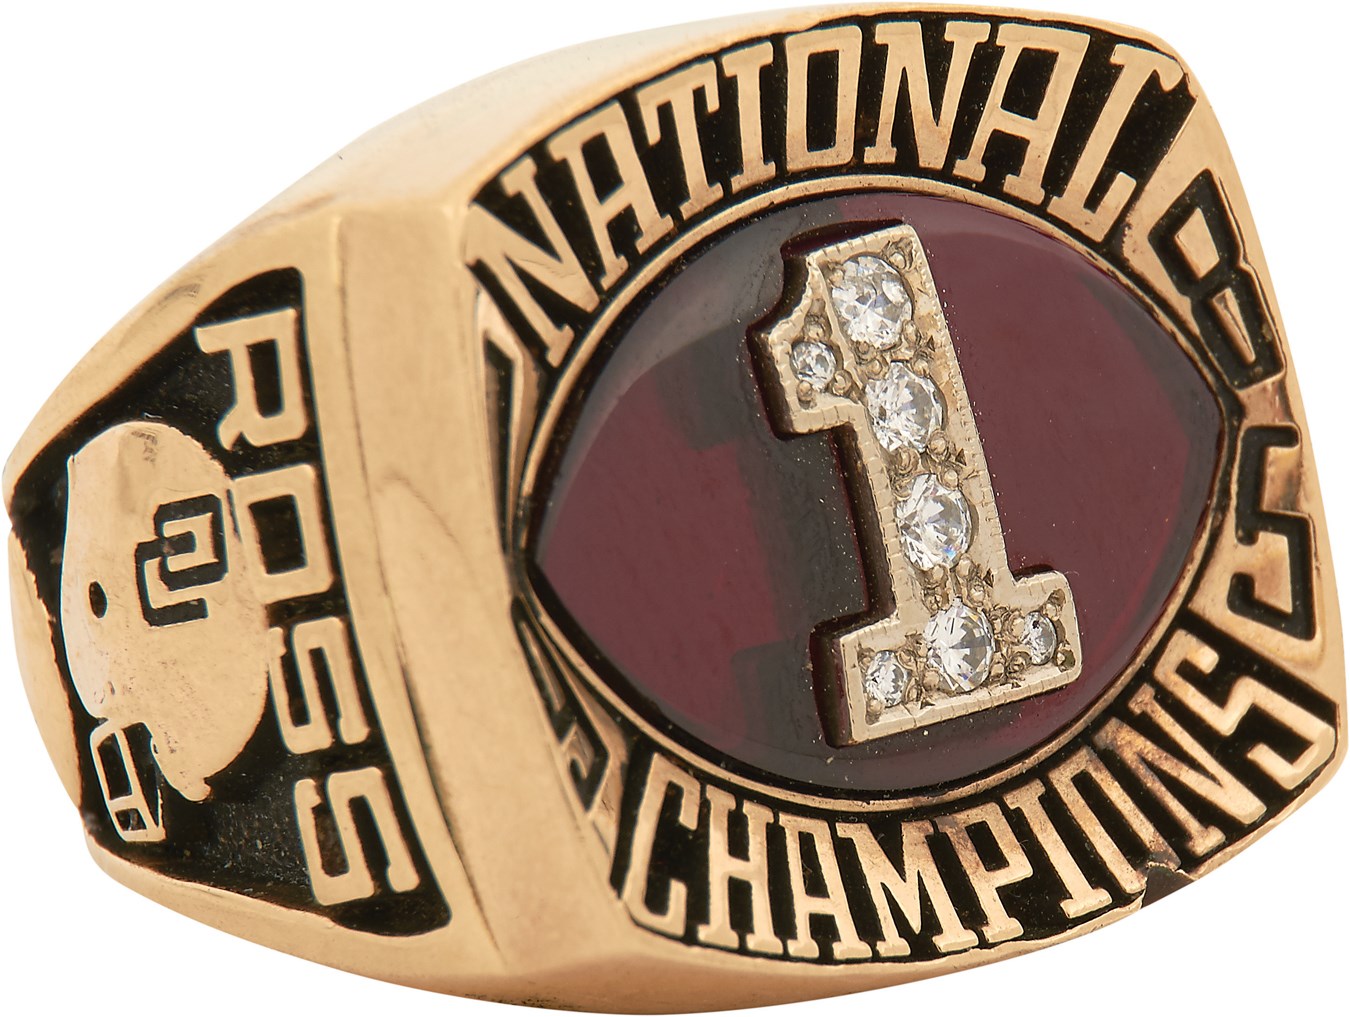 Sports Rings And Awards - 1985 Oklahoma Sooners National Championship Ring